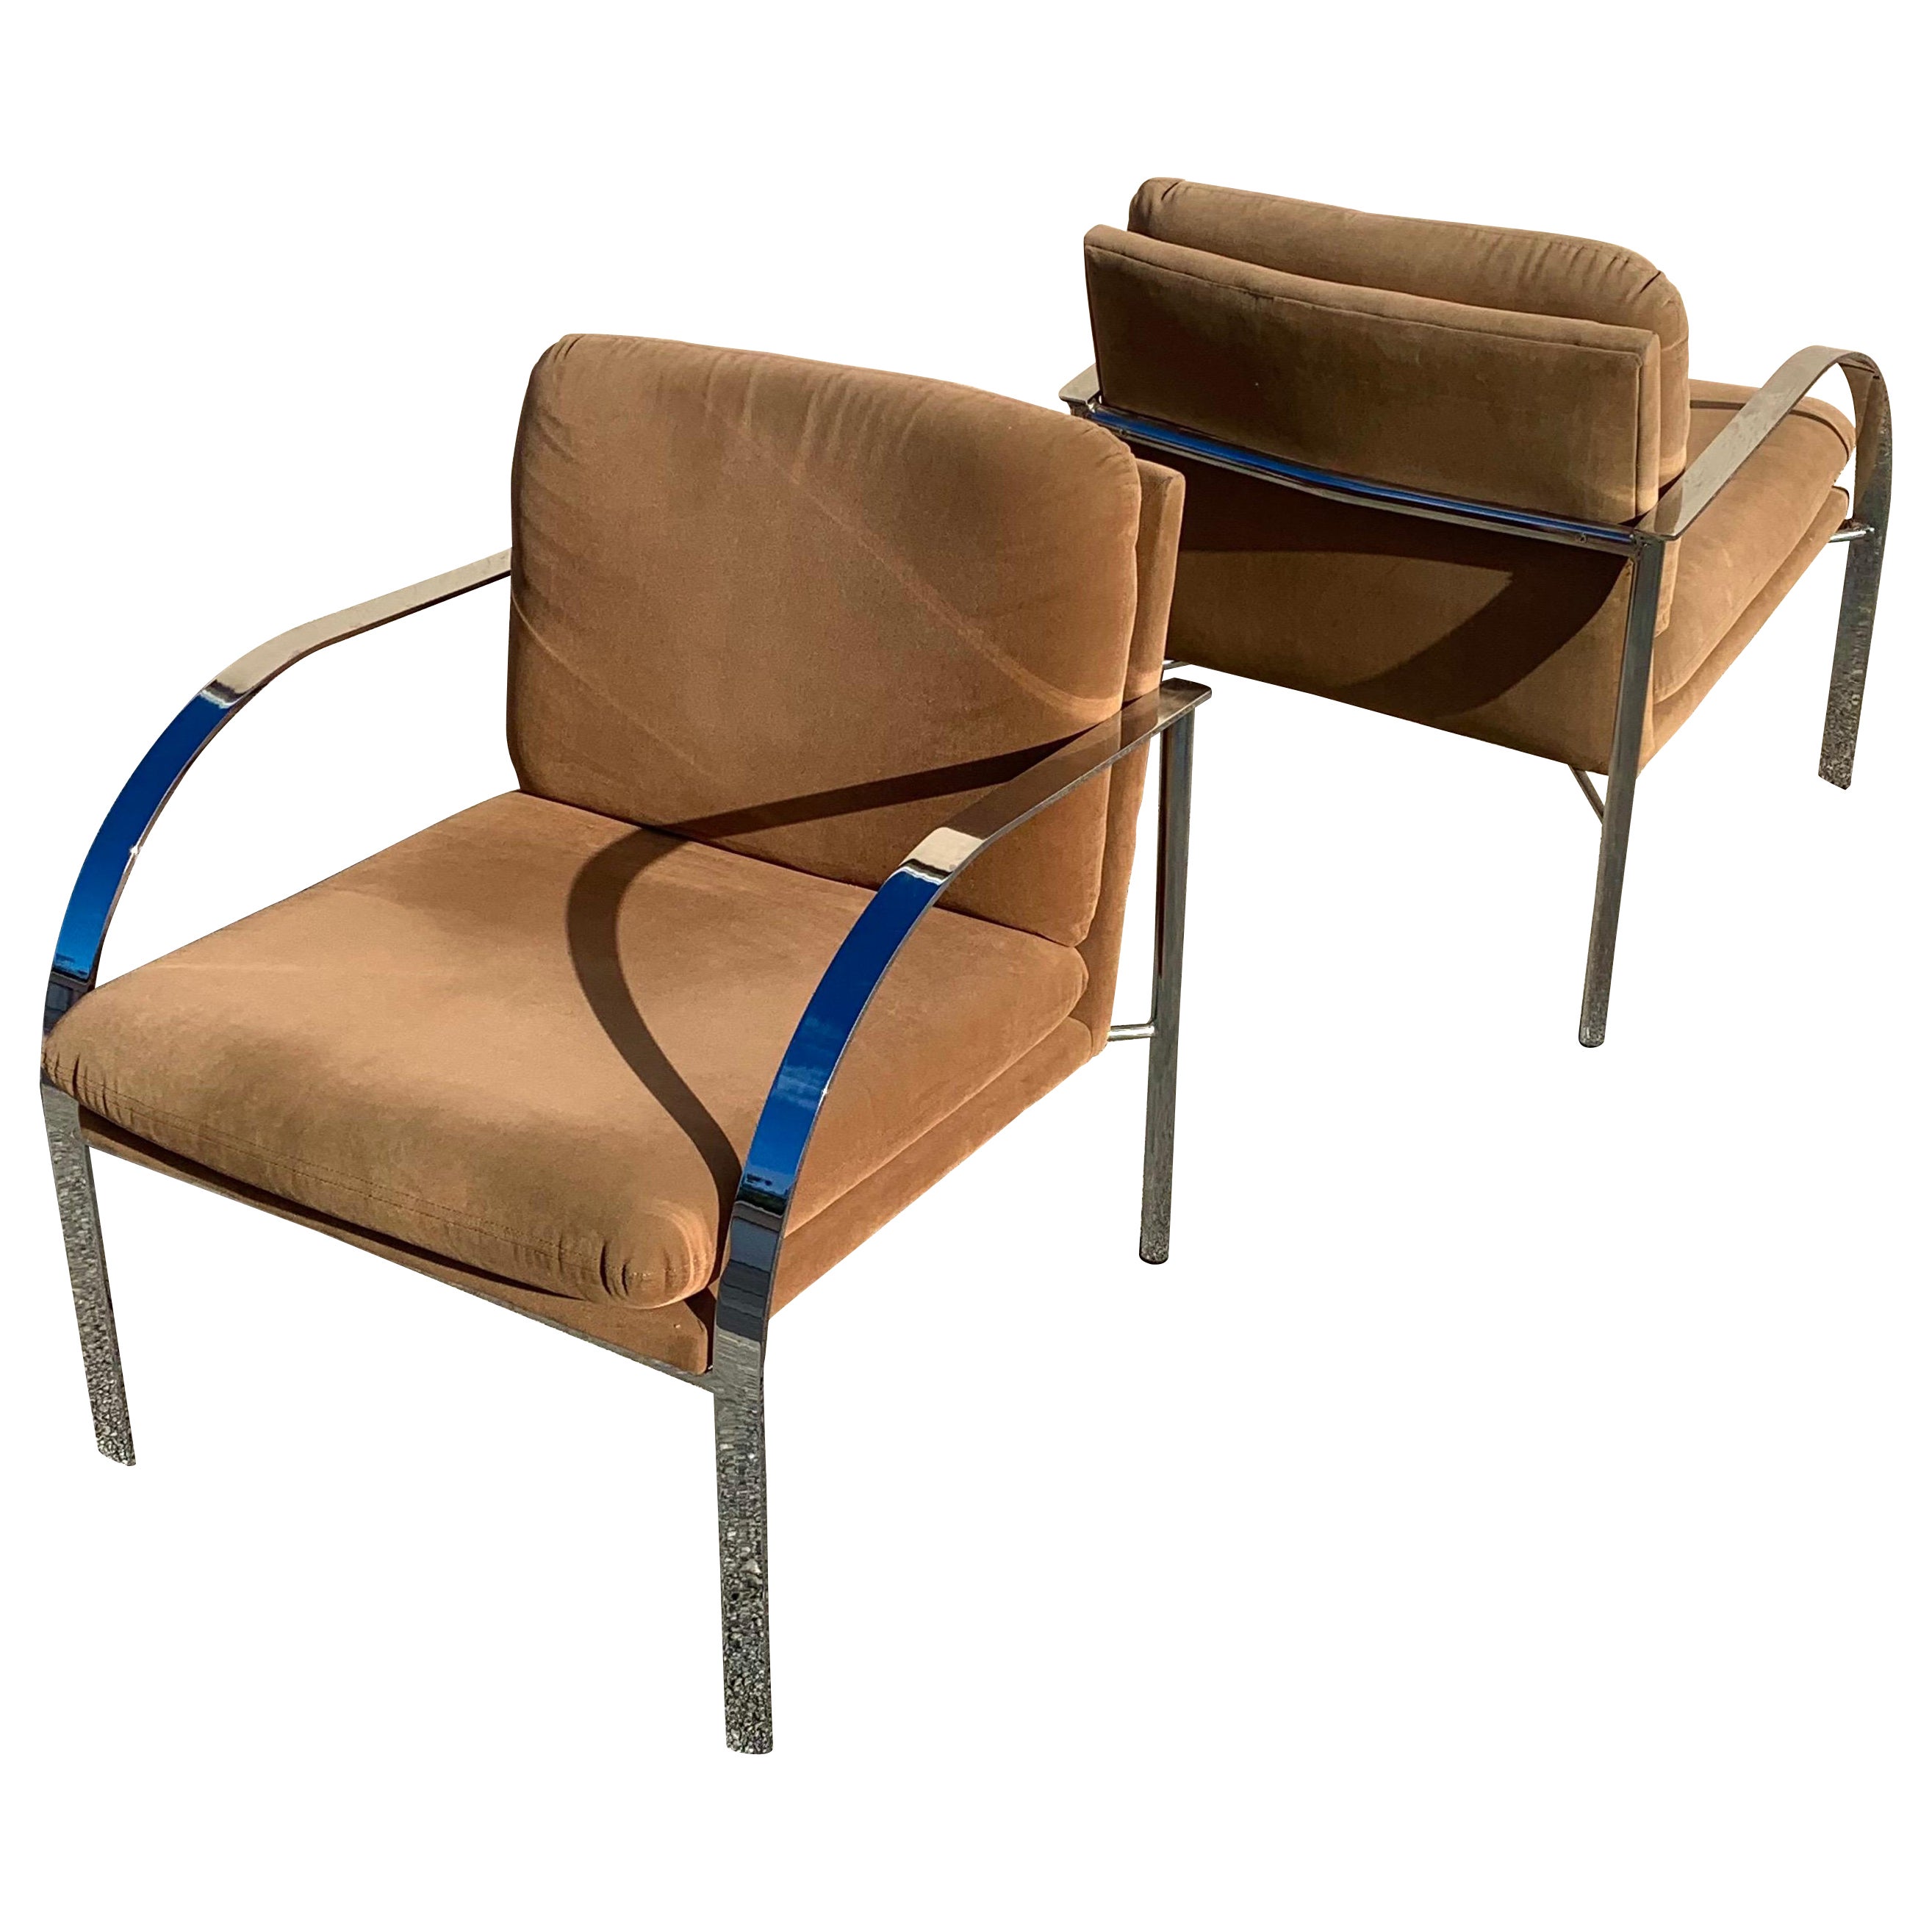 1980s Milo Baughman Style Mid-Century Modern Flat Bar Chrome Lounge Chairs For Sale